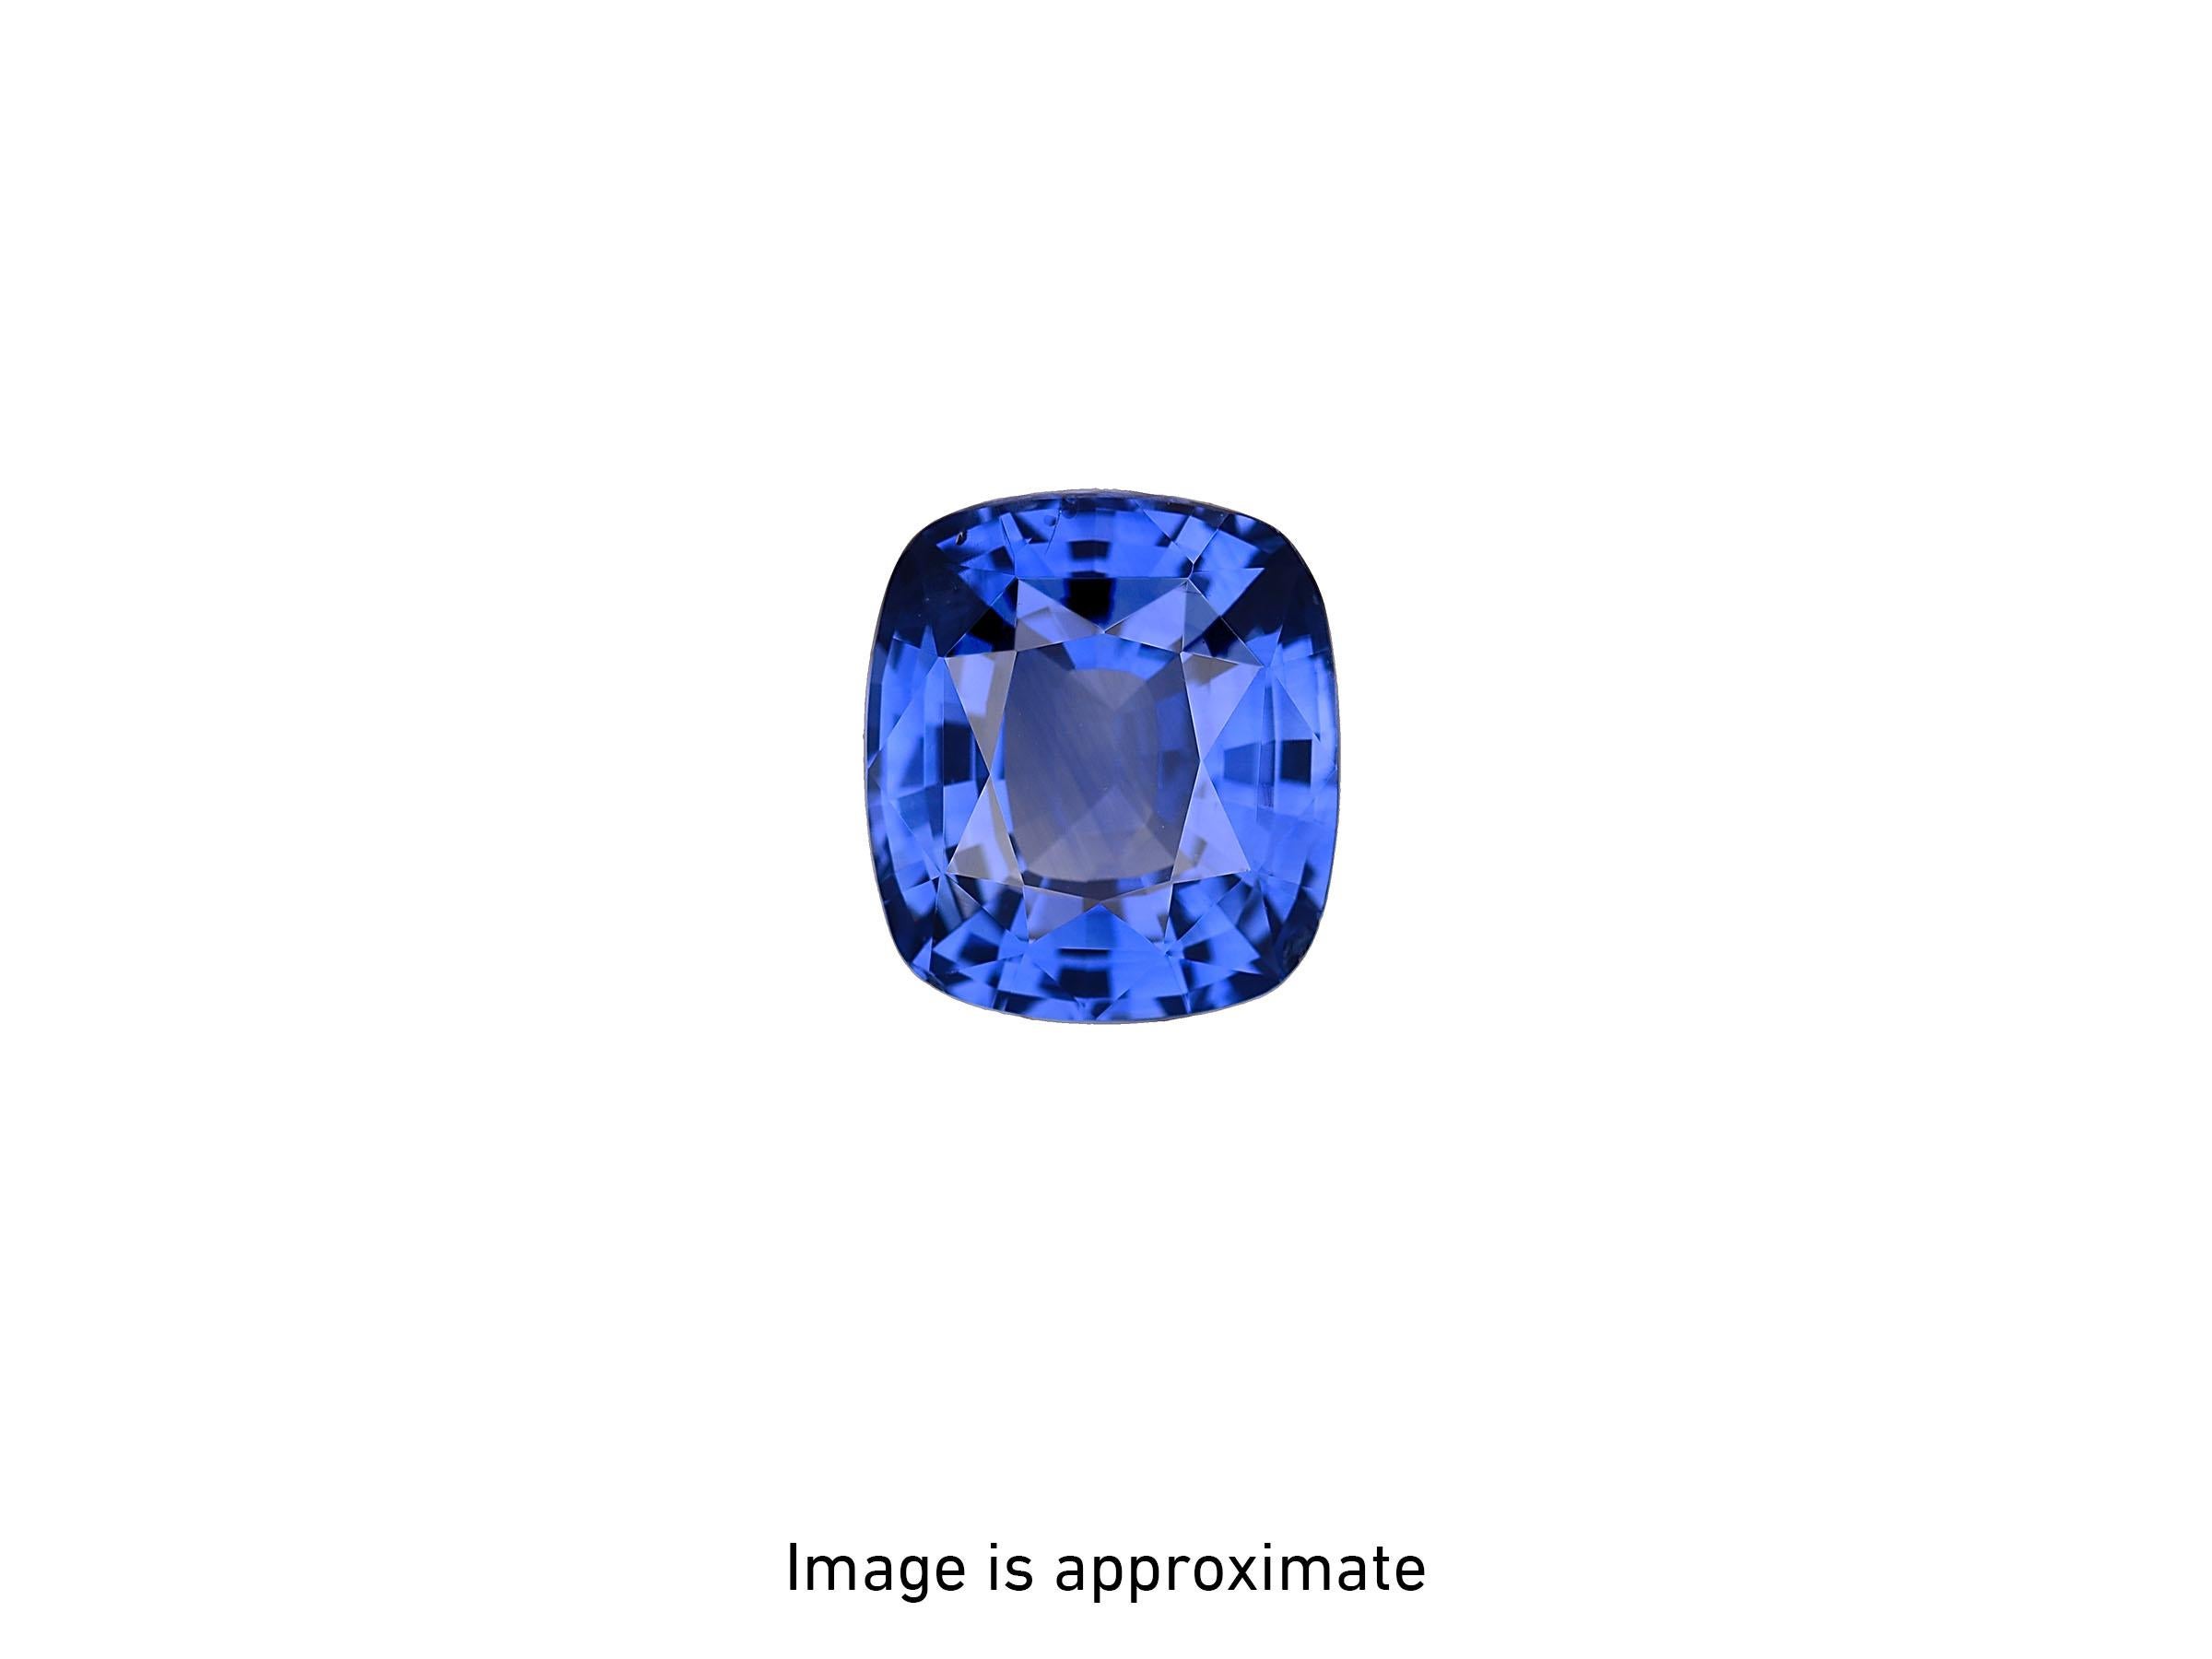 3 carat blue sapphire ring